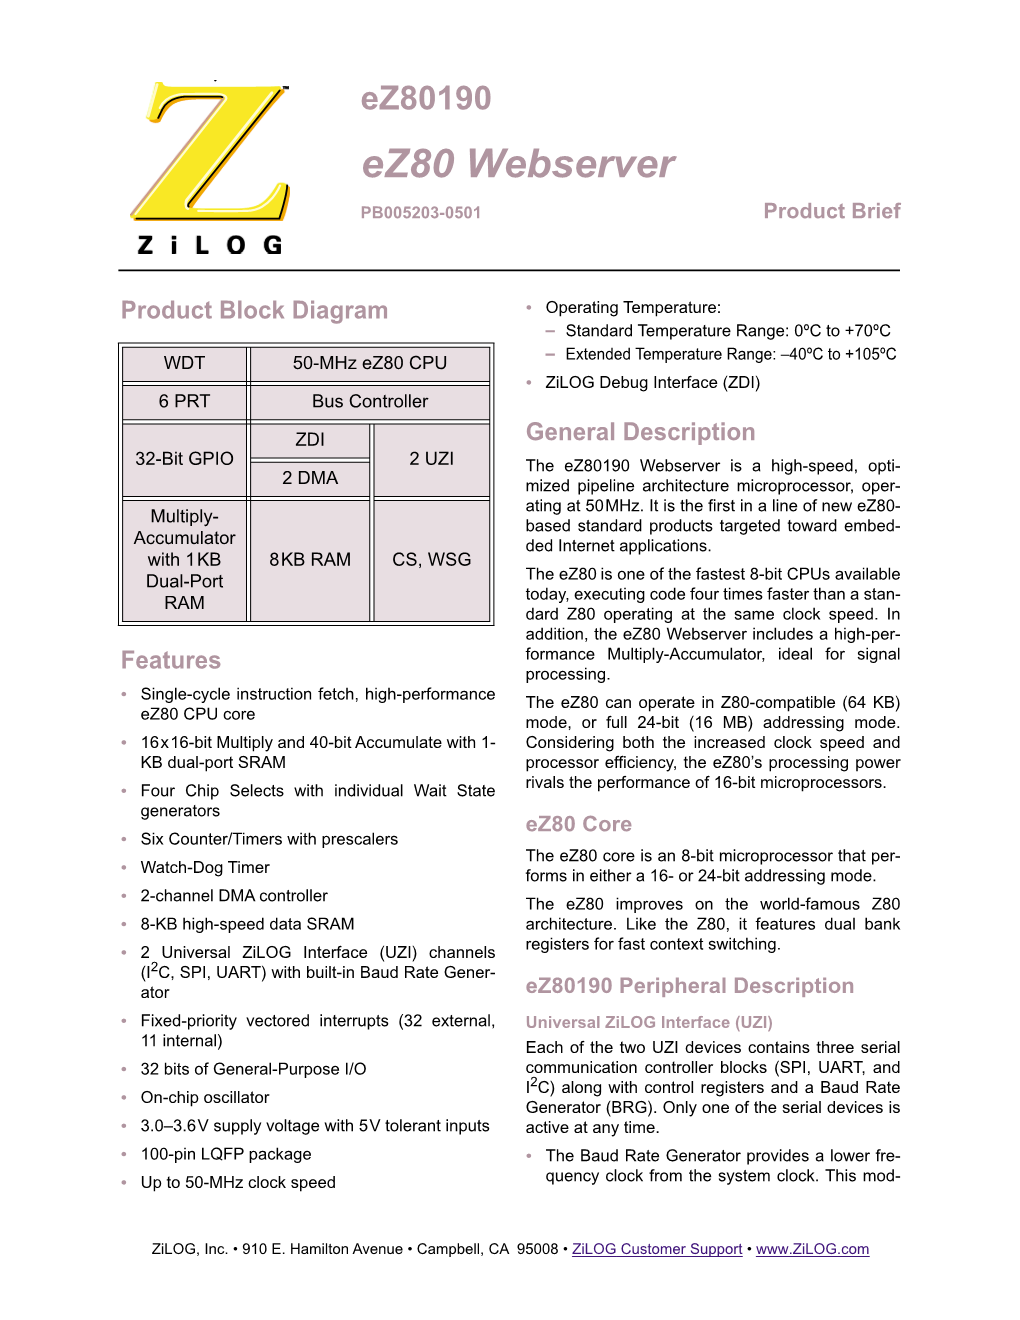 Ez80 Webserver Product Brief